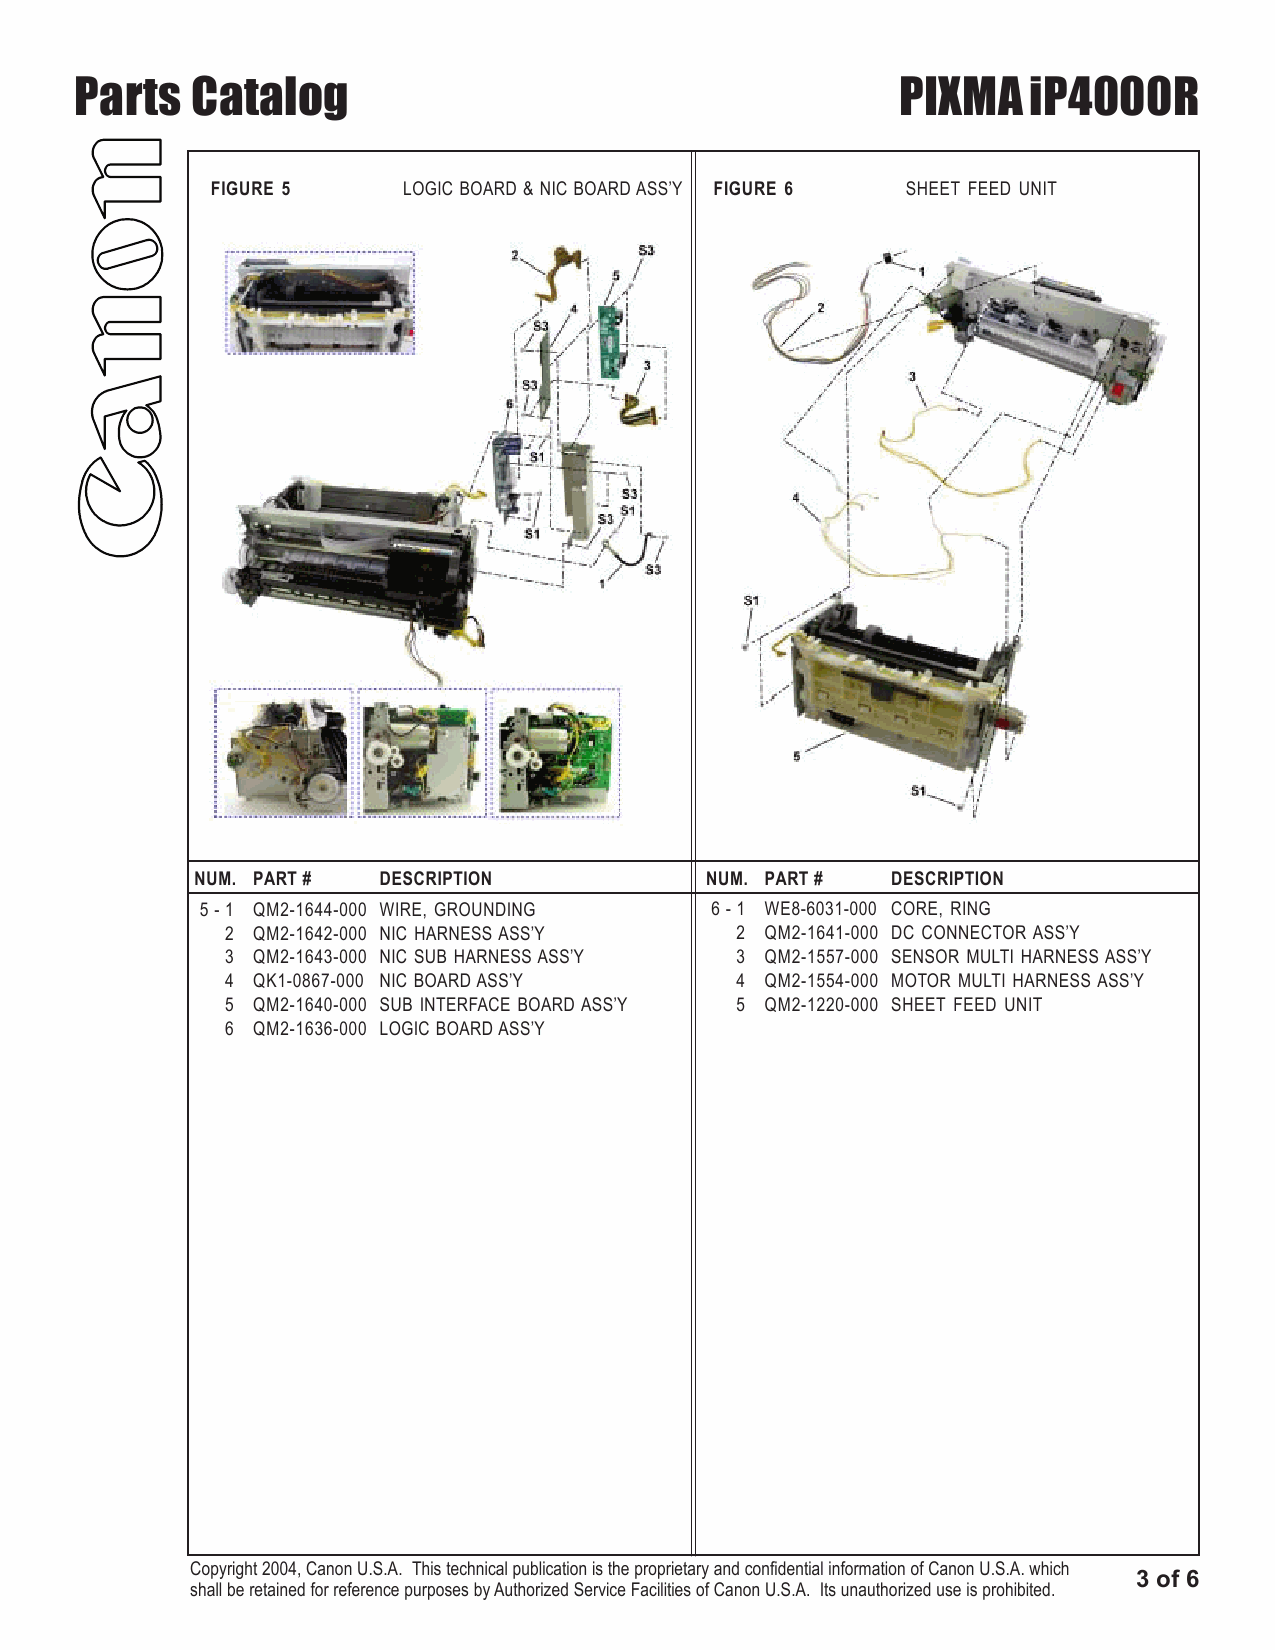 Canon PIXMA iP4000R Parts Catalog-4